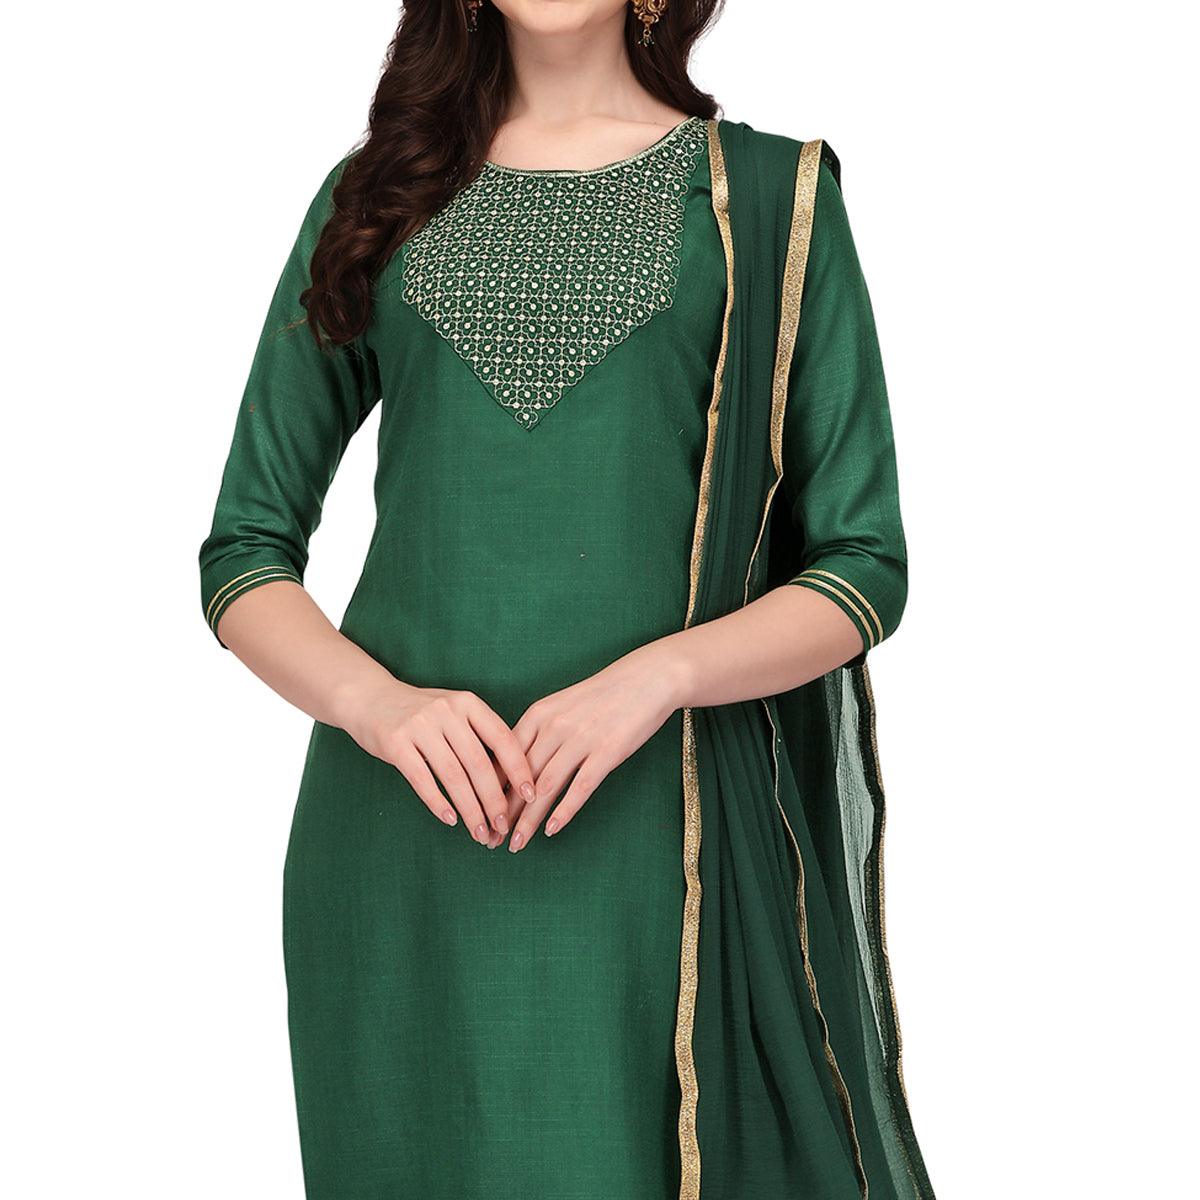 Eerum Chanderi Kurta Set in Green | Pink colour combination dresses,  Combination dresses, Green color combination dresses